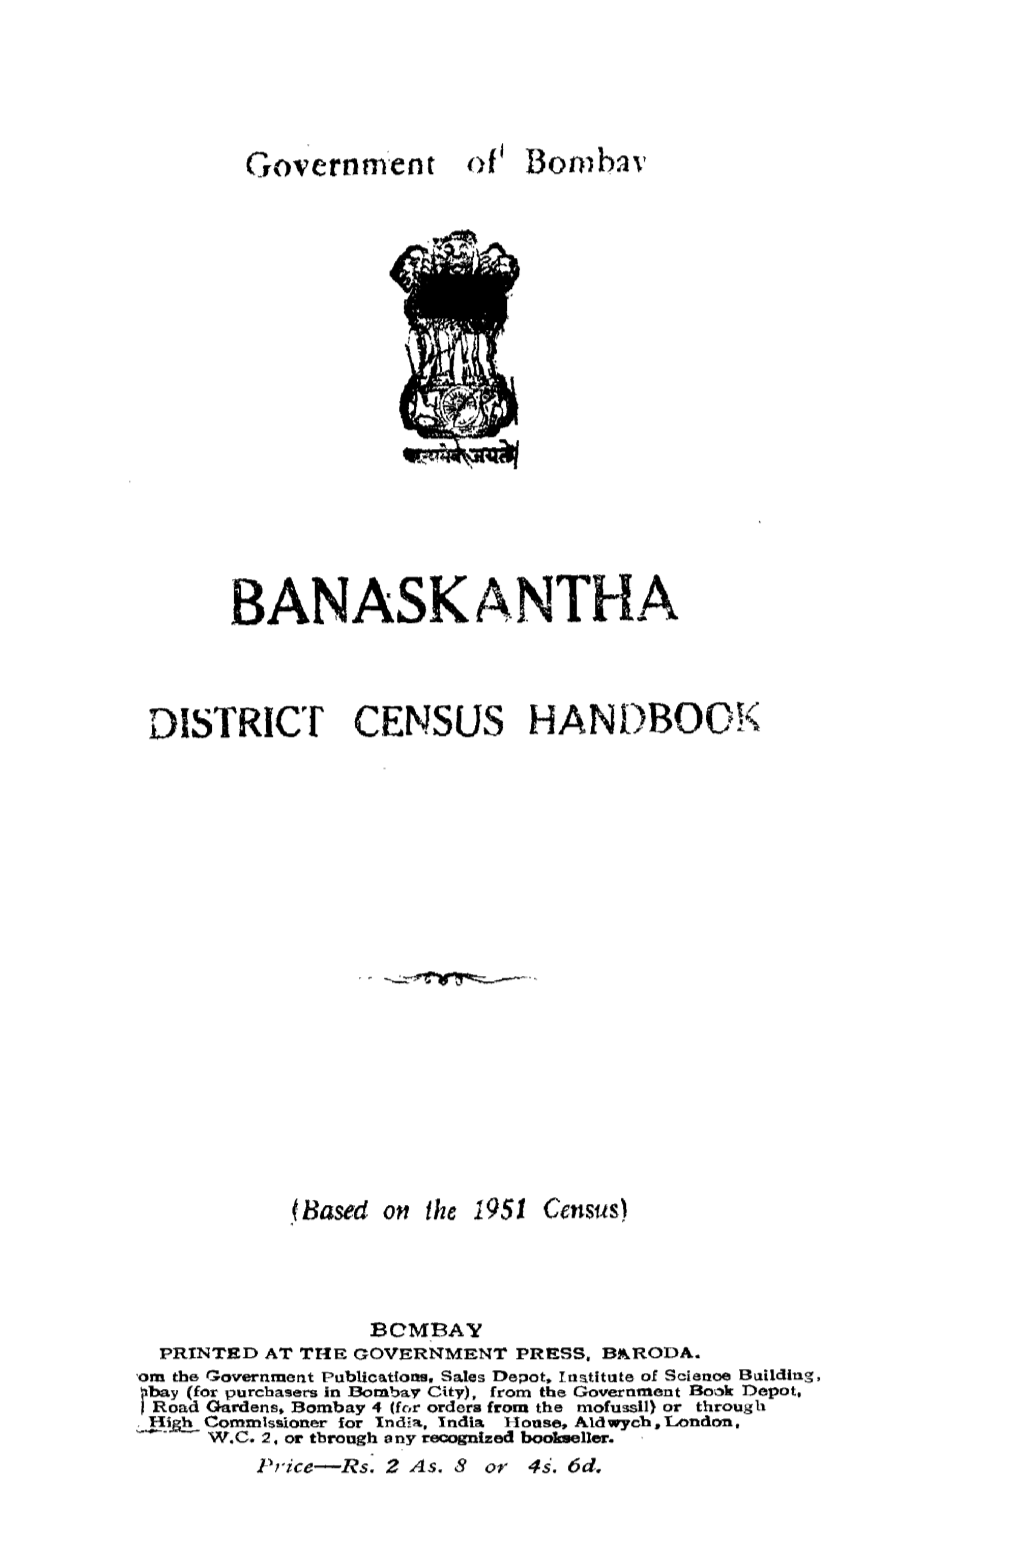 District Census Handbook, Banaskantha